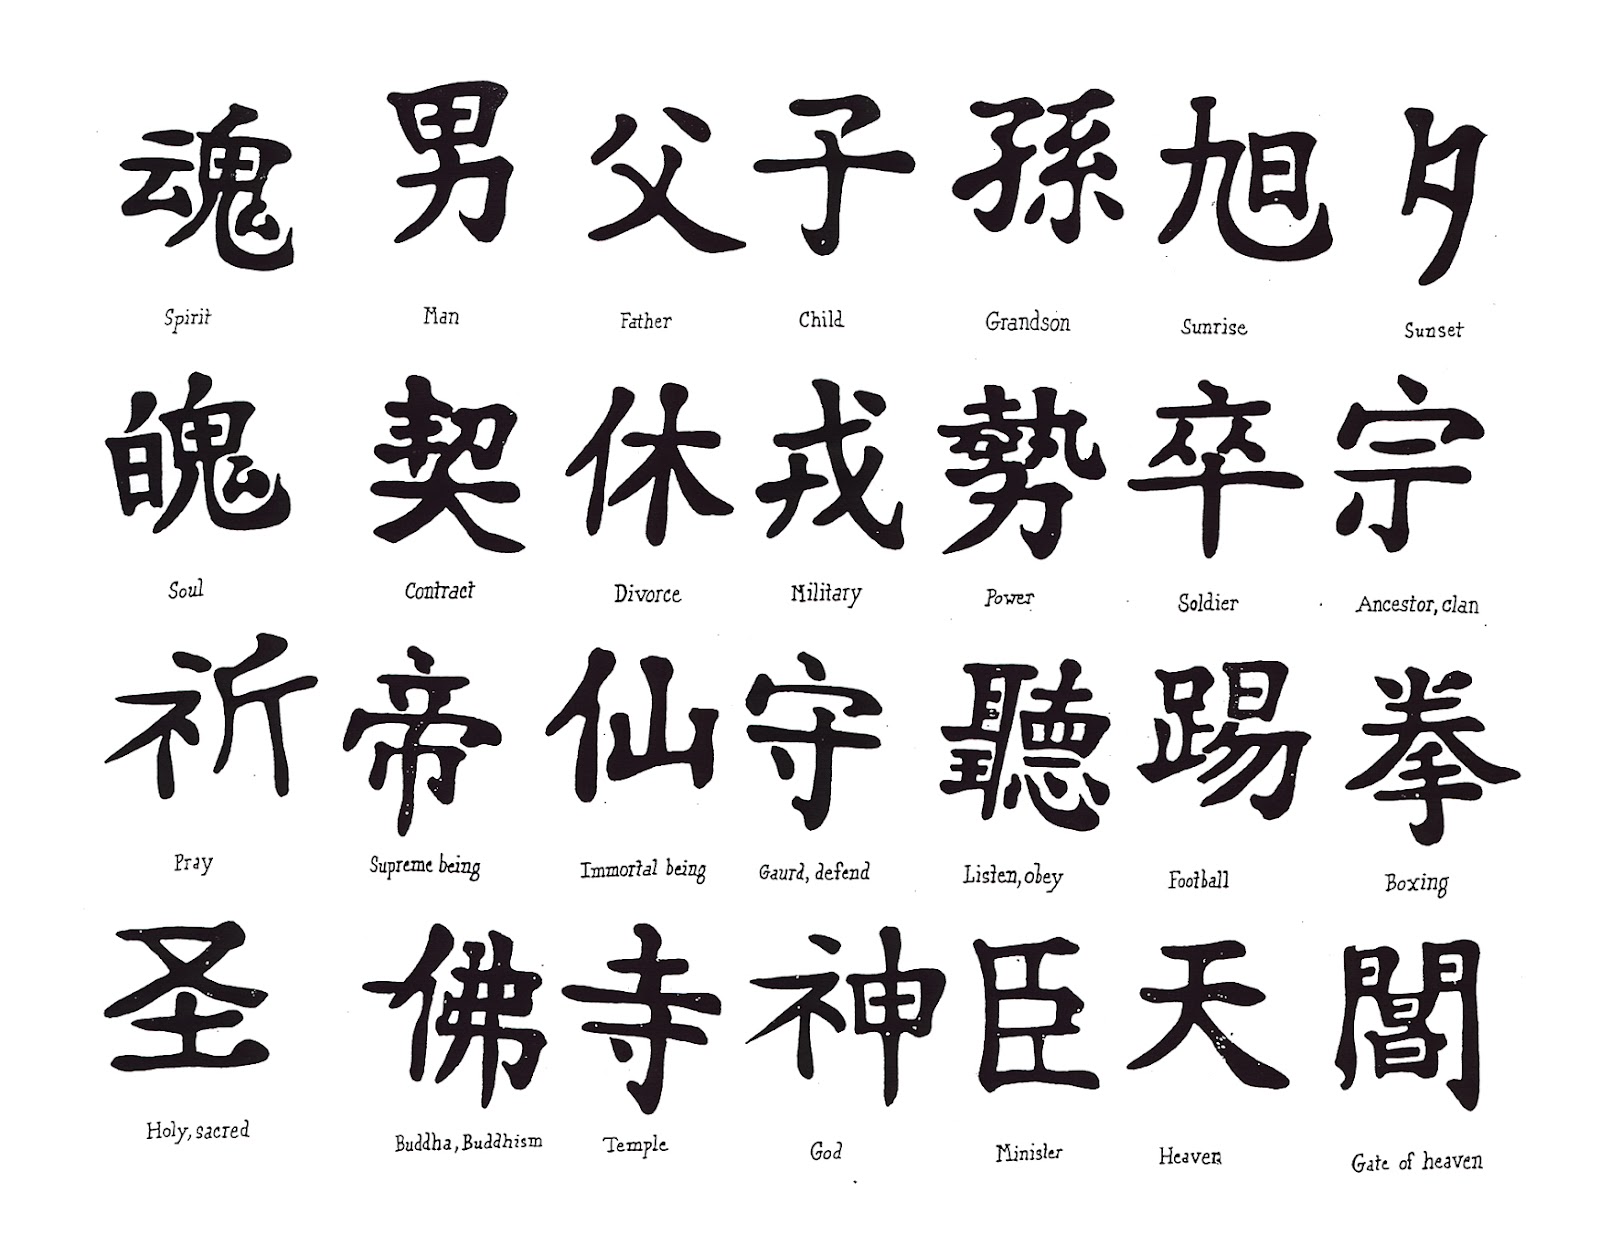 Kanji adalah salah satu dari empat set aksara yang digunakan dalam tulisan modern Jepang selain kana